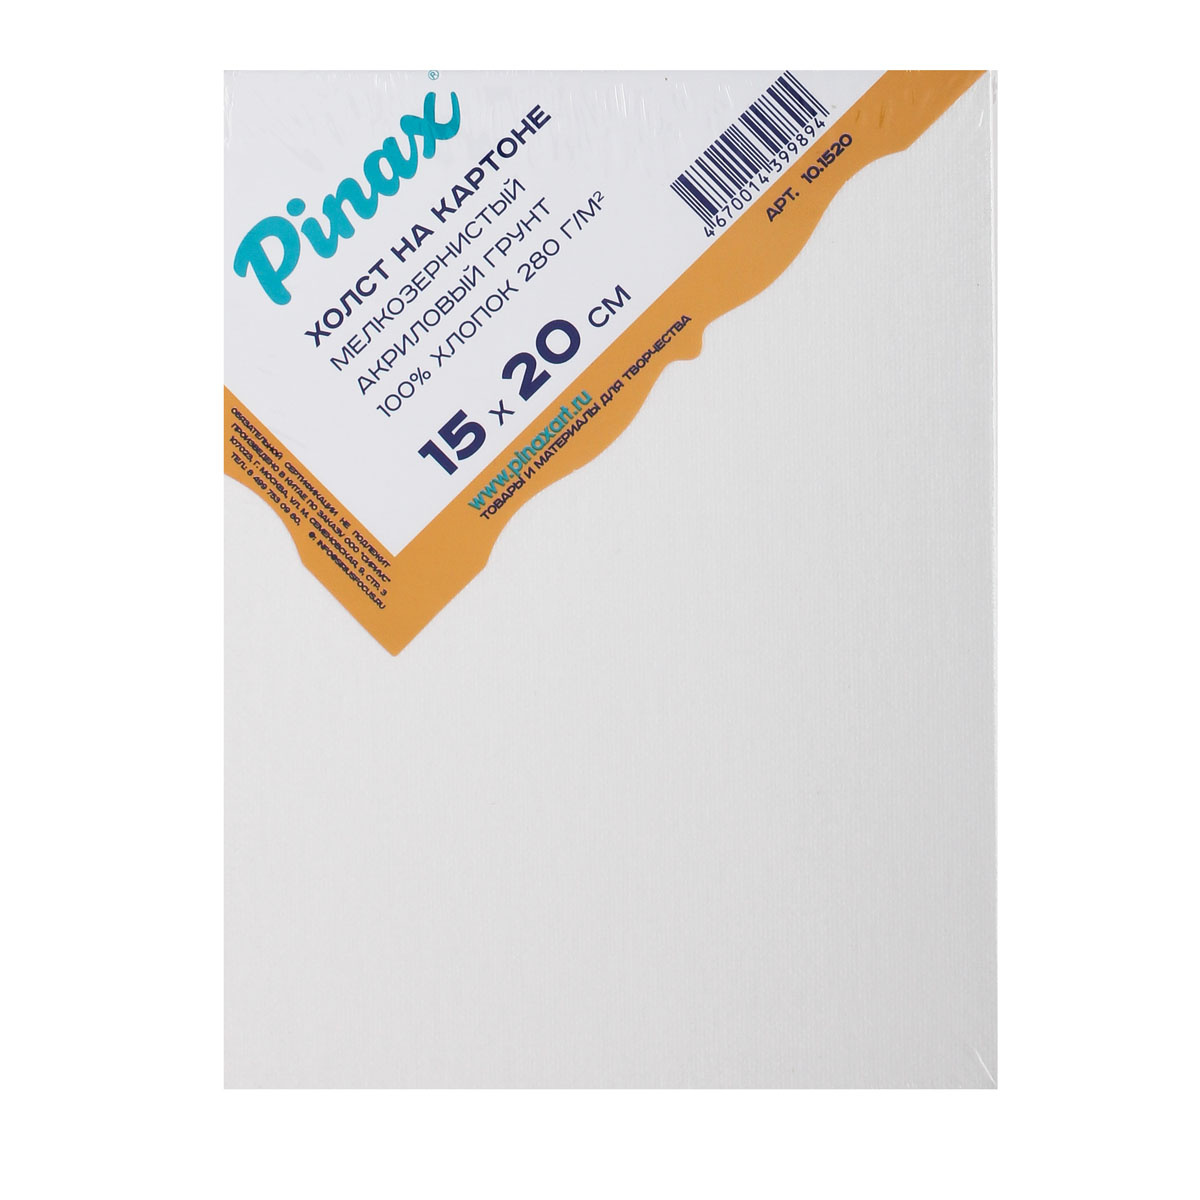 Холст грунтованный на картоне Pinax 280 г 15x20 см холст грунтованный на картоне pinax 280 г 60x70 см